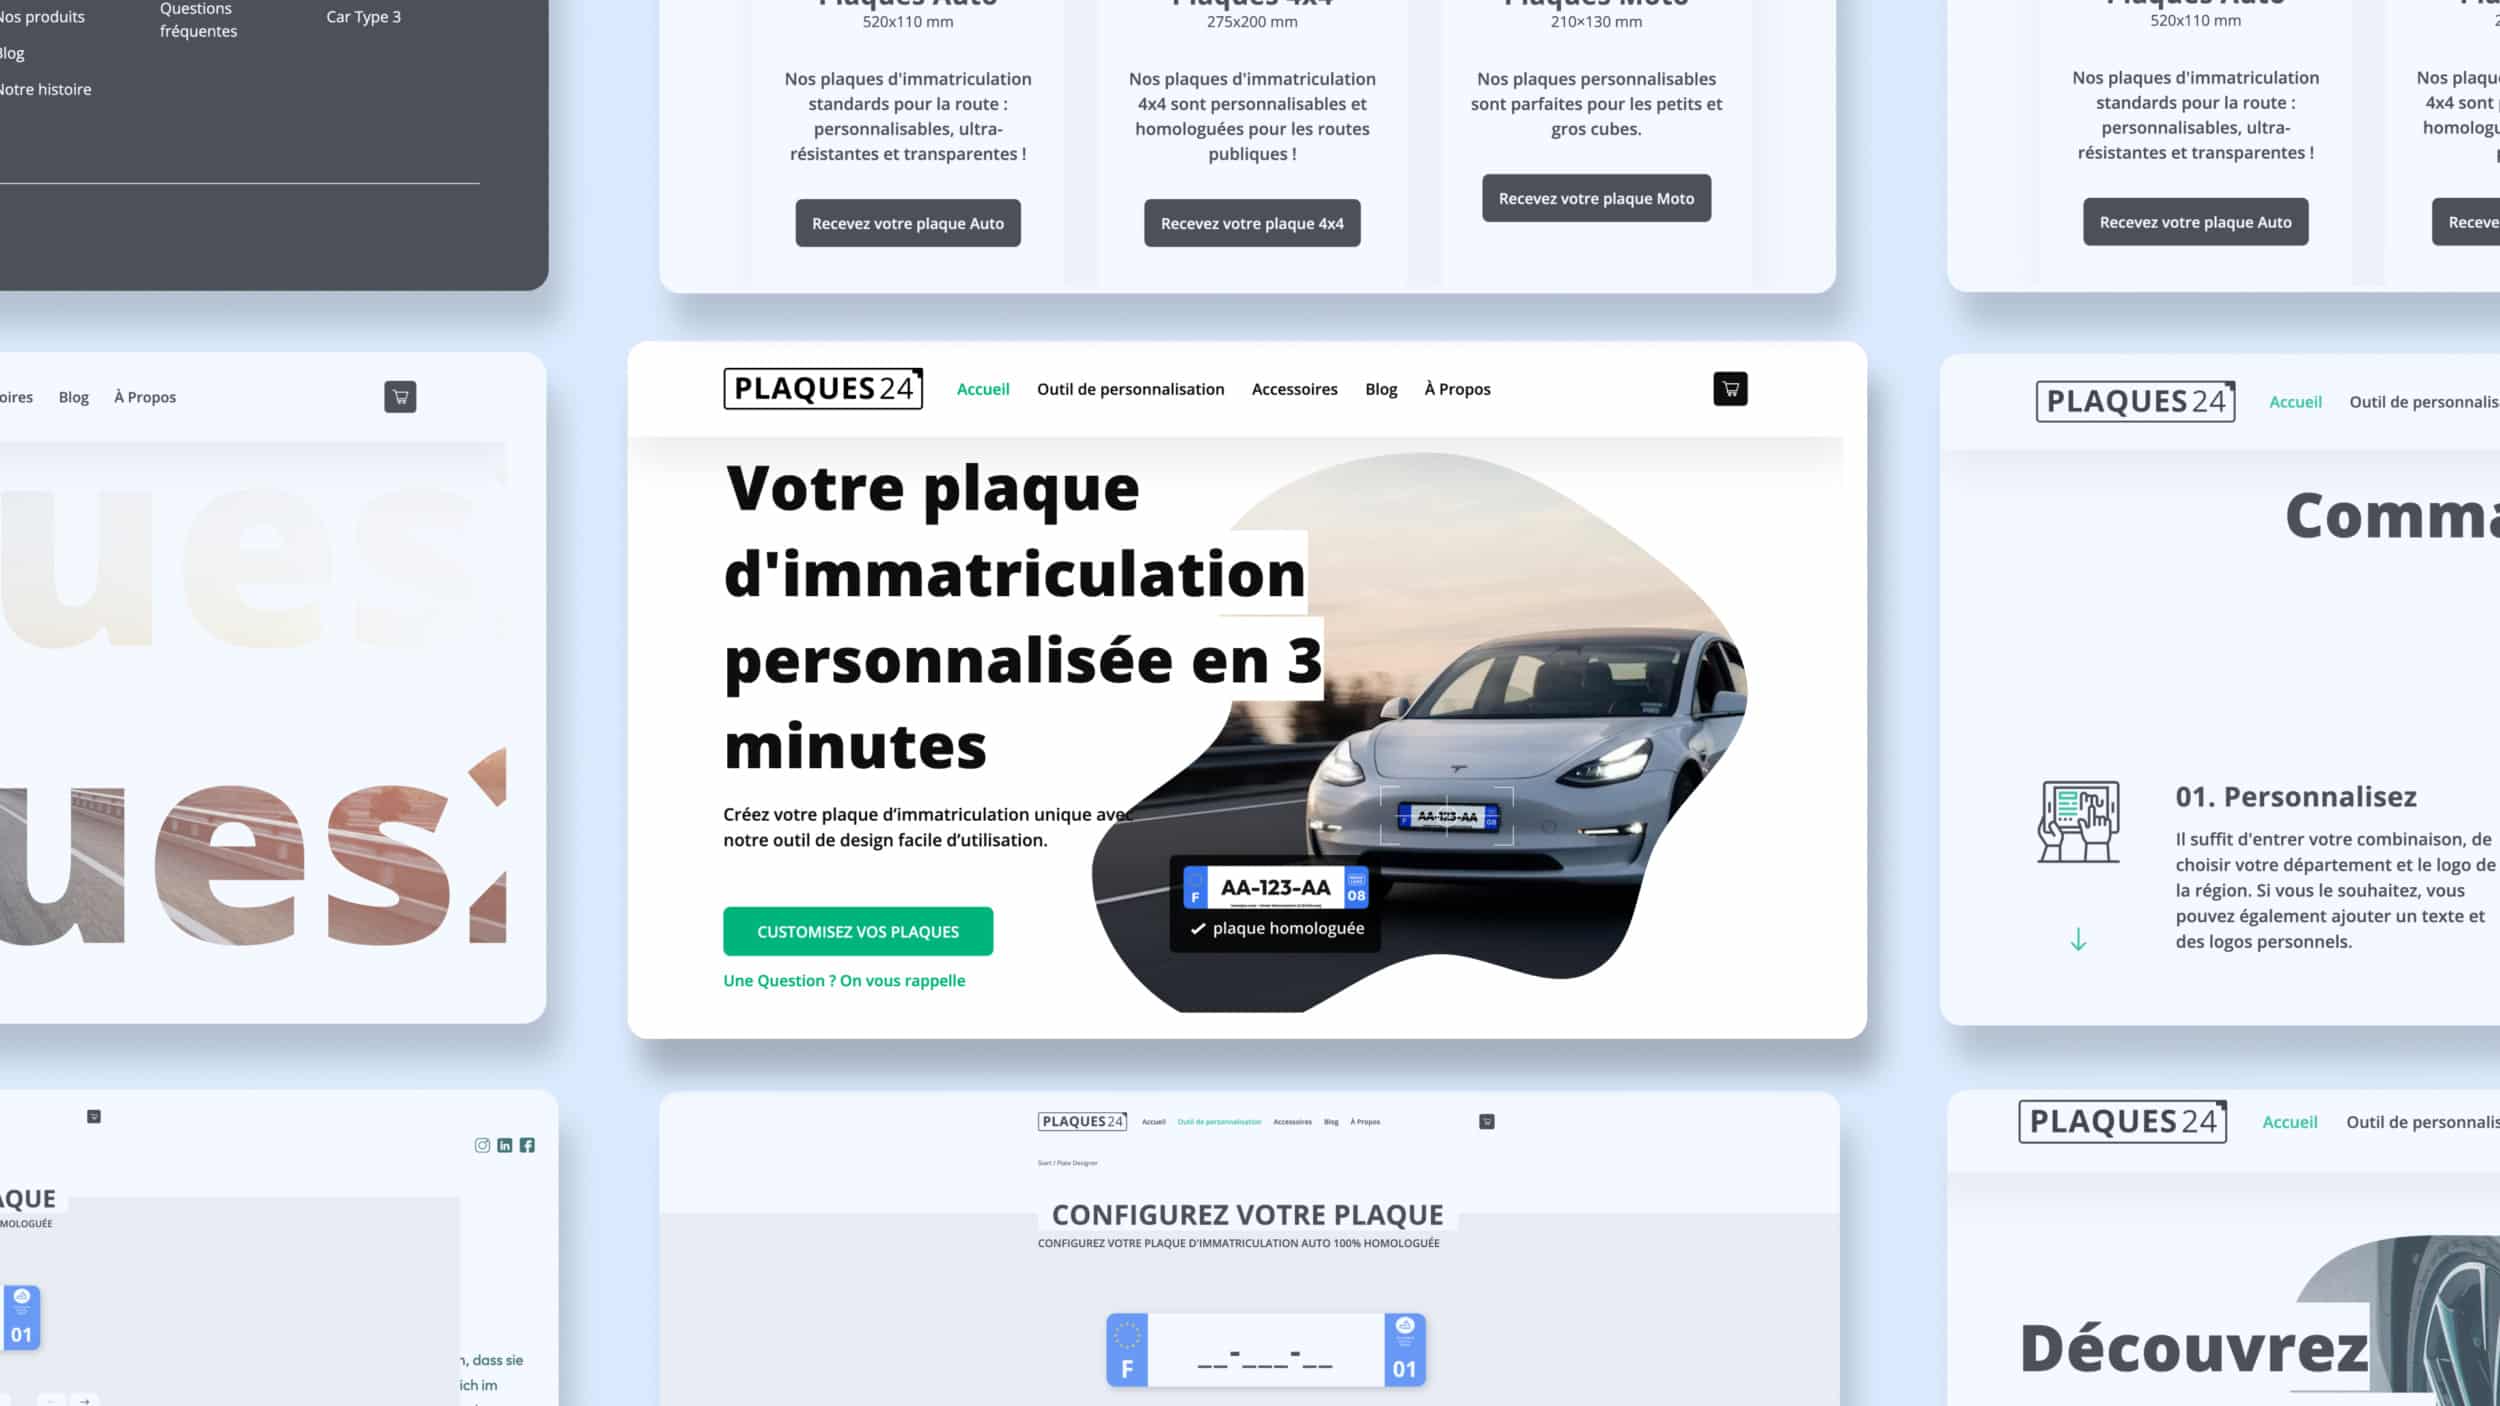 Plaques24 Webdesign